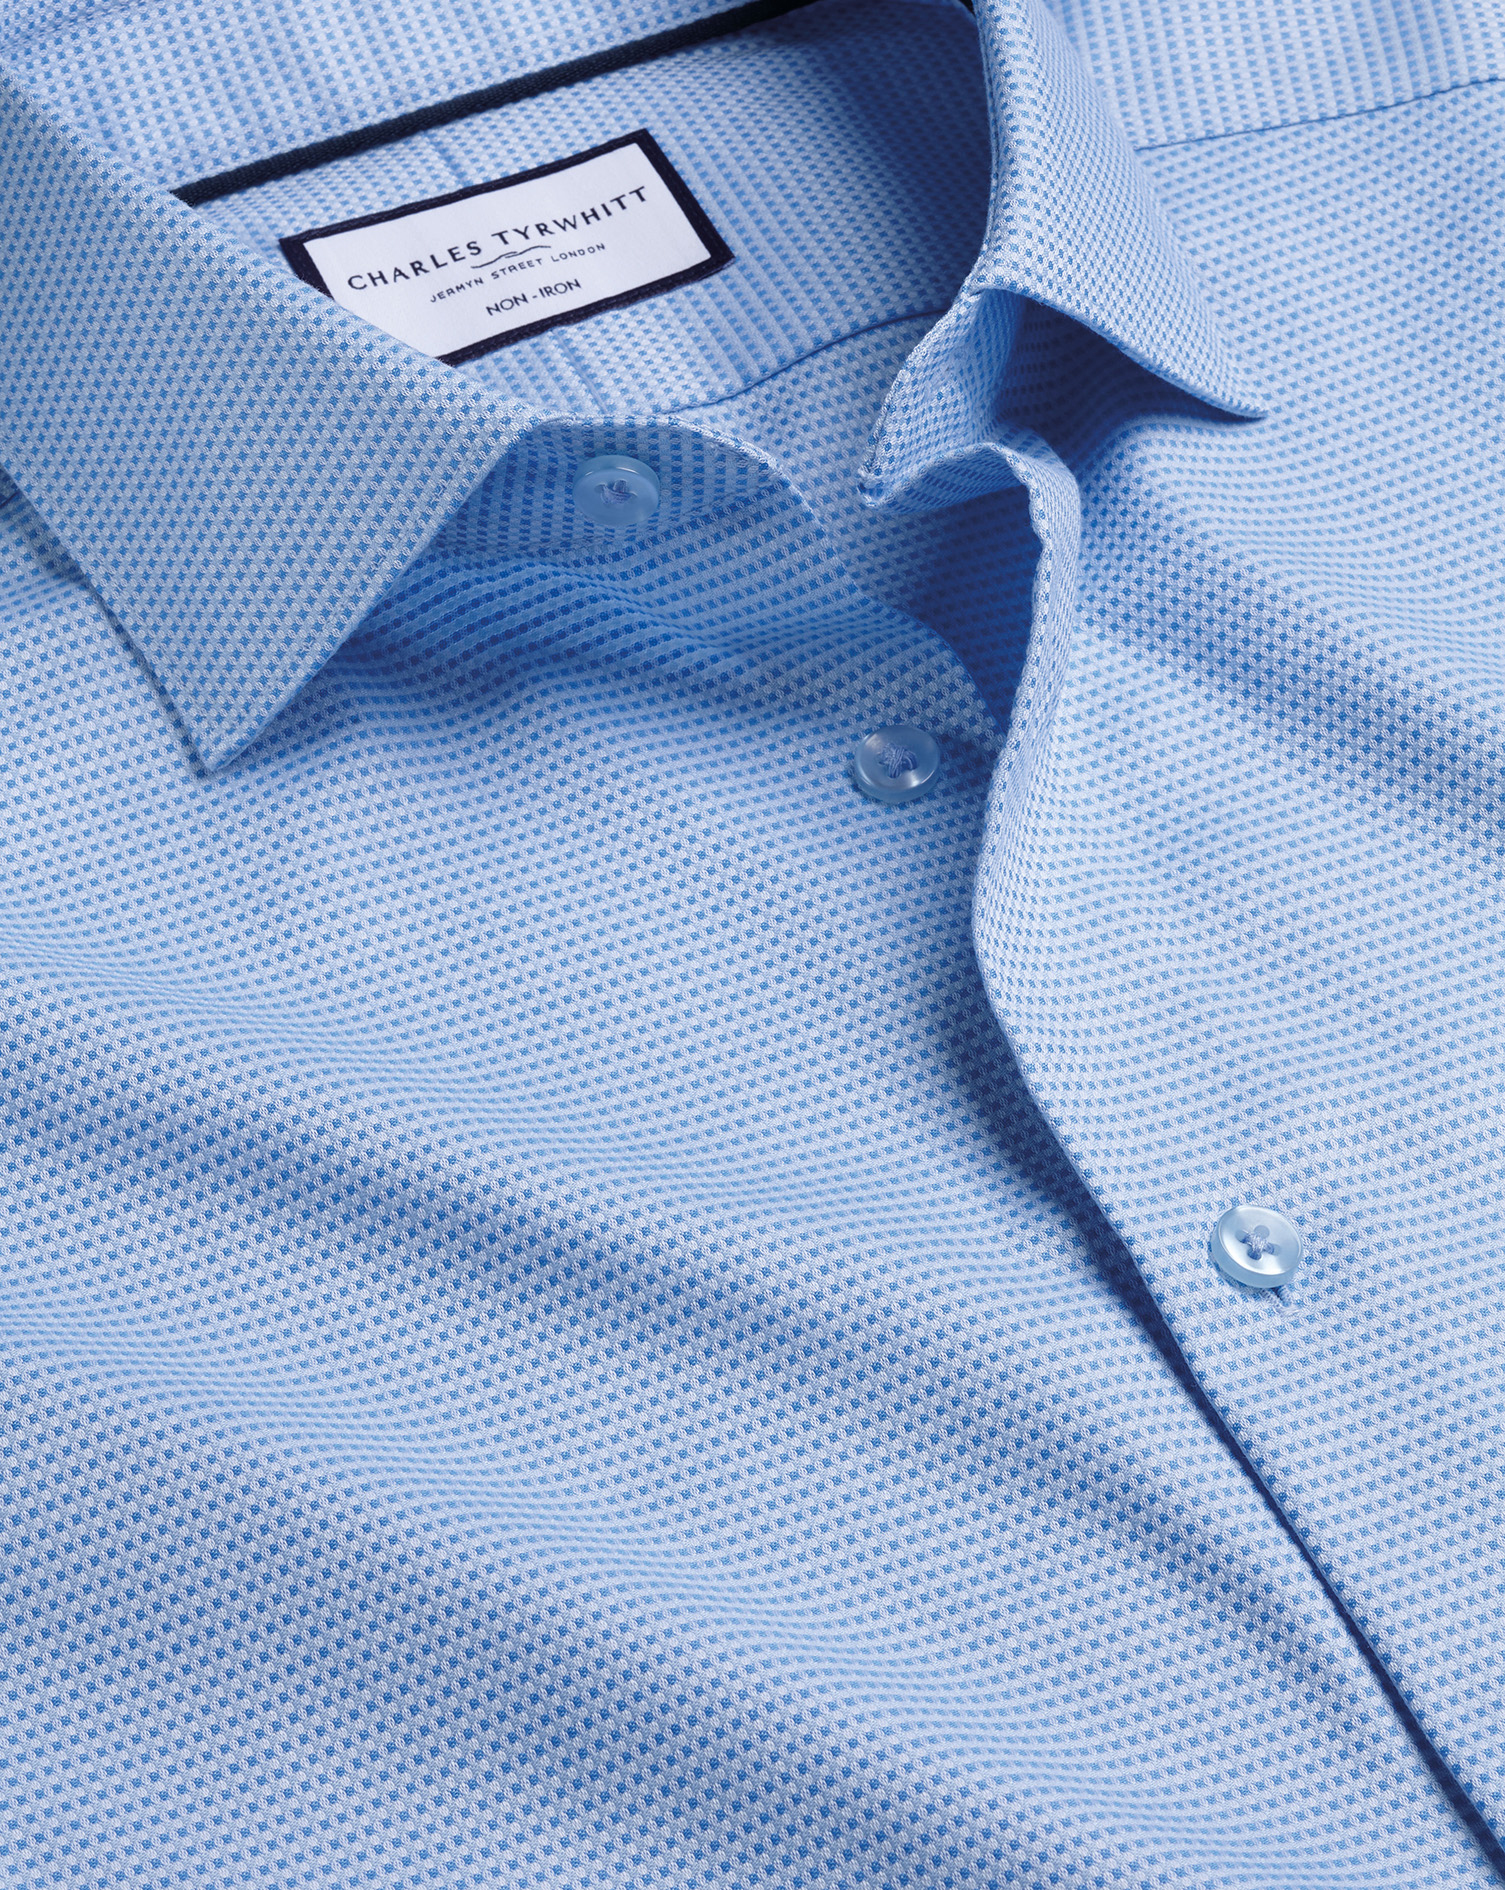 Men's Charles Tyrwhitt Non-Iron Stretch Texture Square Dress Shirt - Sky Blue Single Cuff Size Mediu